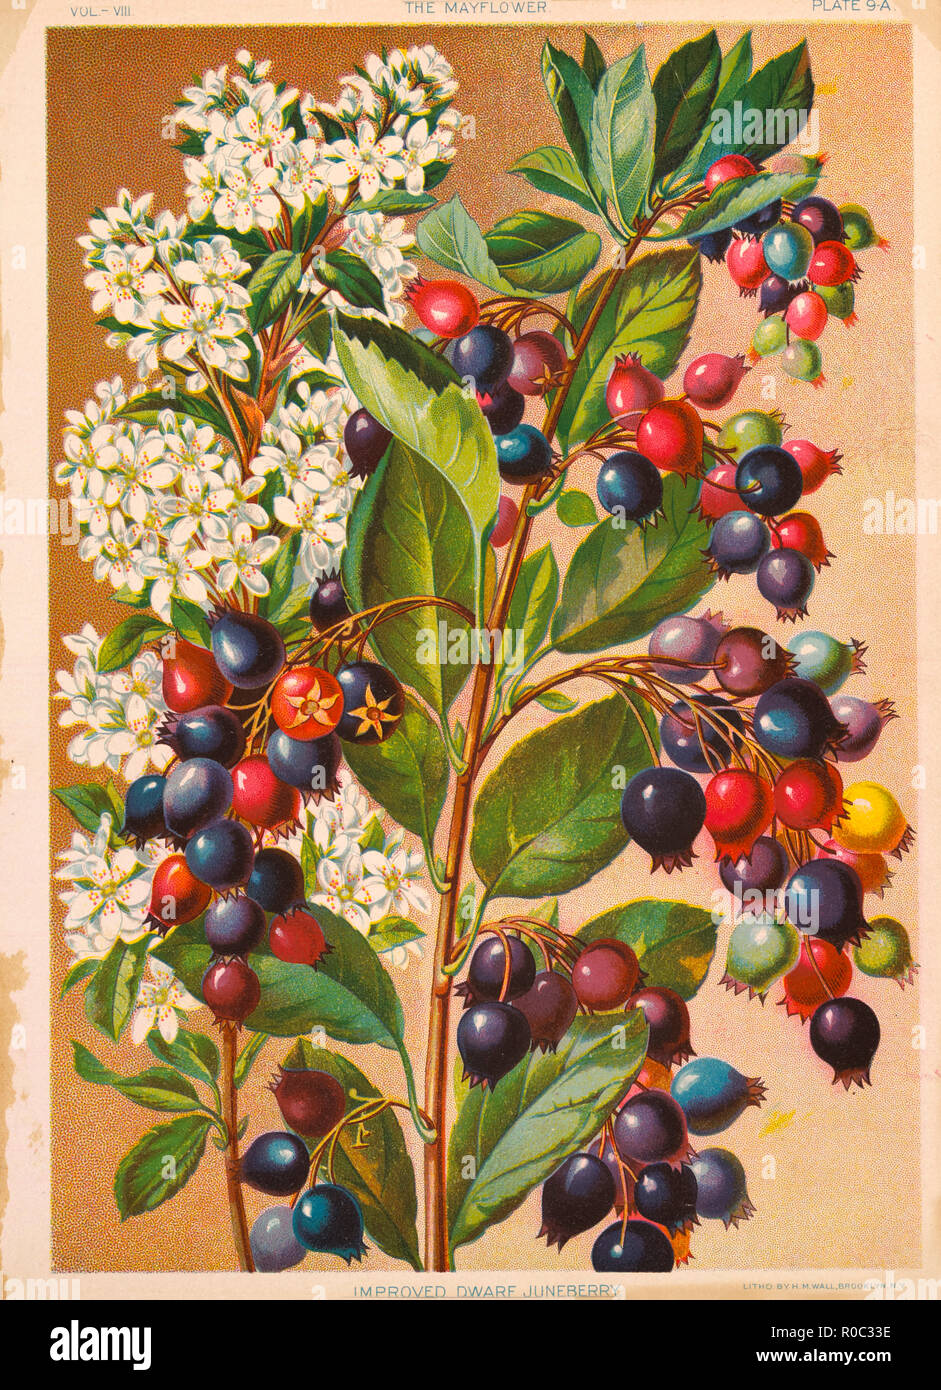 Improved Dwarf Juneberry, Chromolithograph, H.M. Wall, Mayflower Publishing Co., 1892 Stock Photo